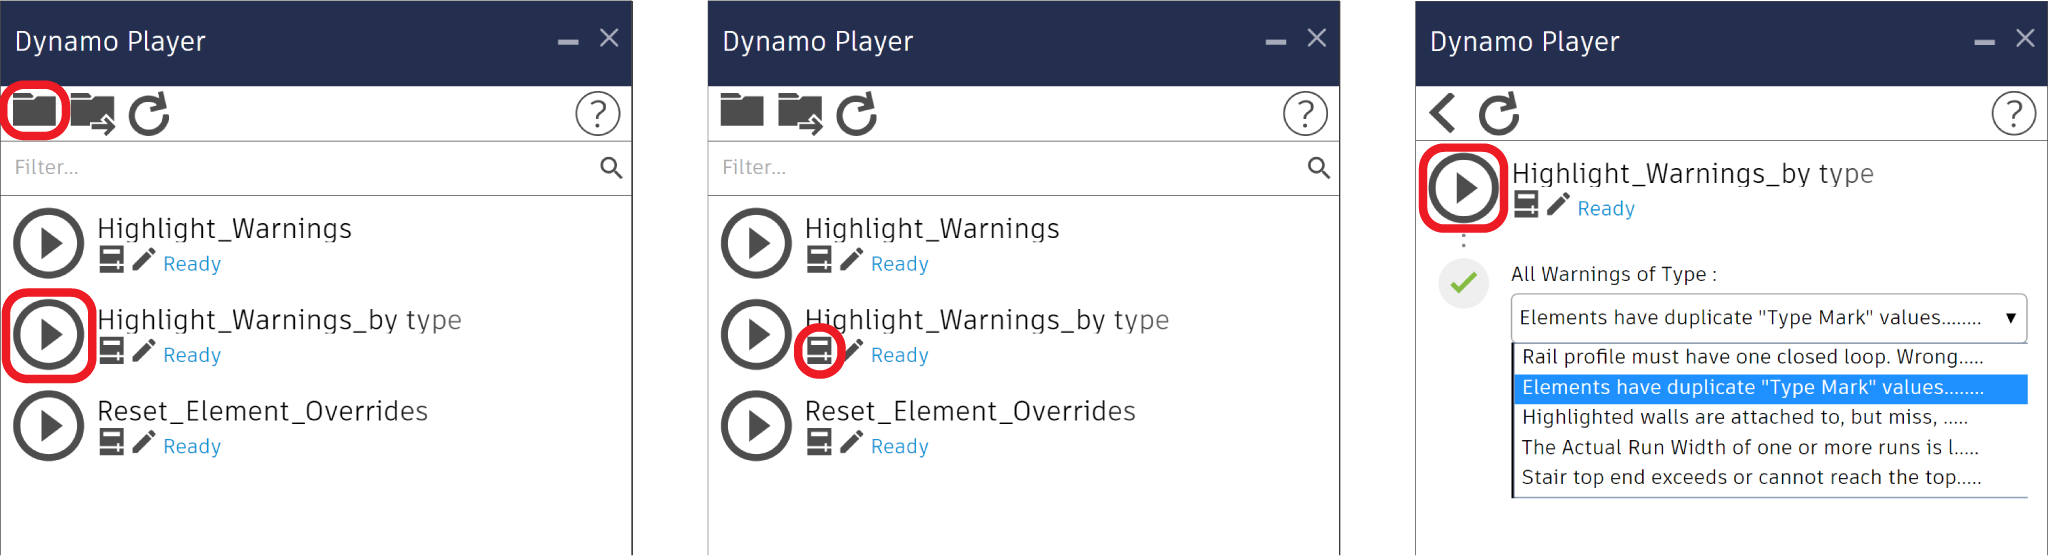 dynamo player edit inputs